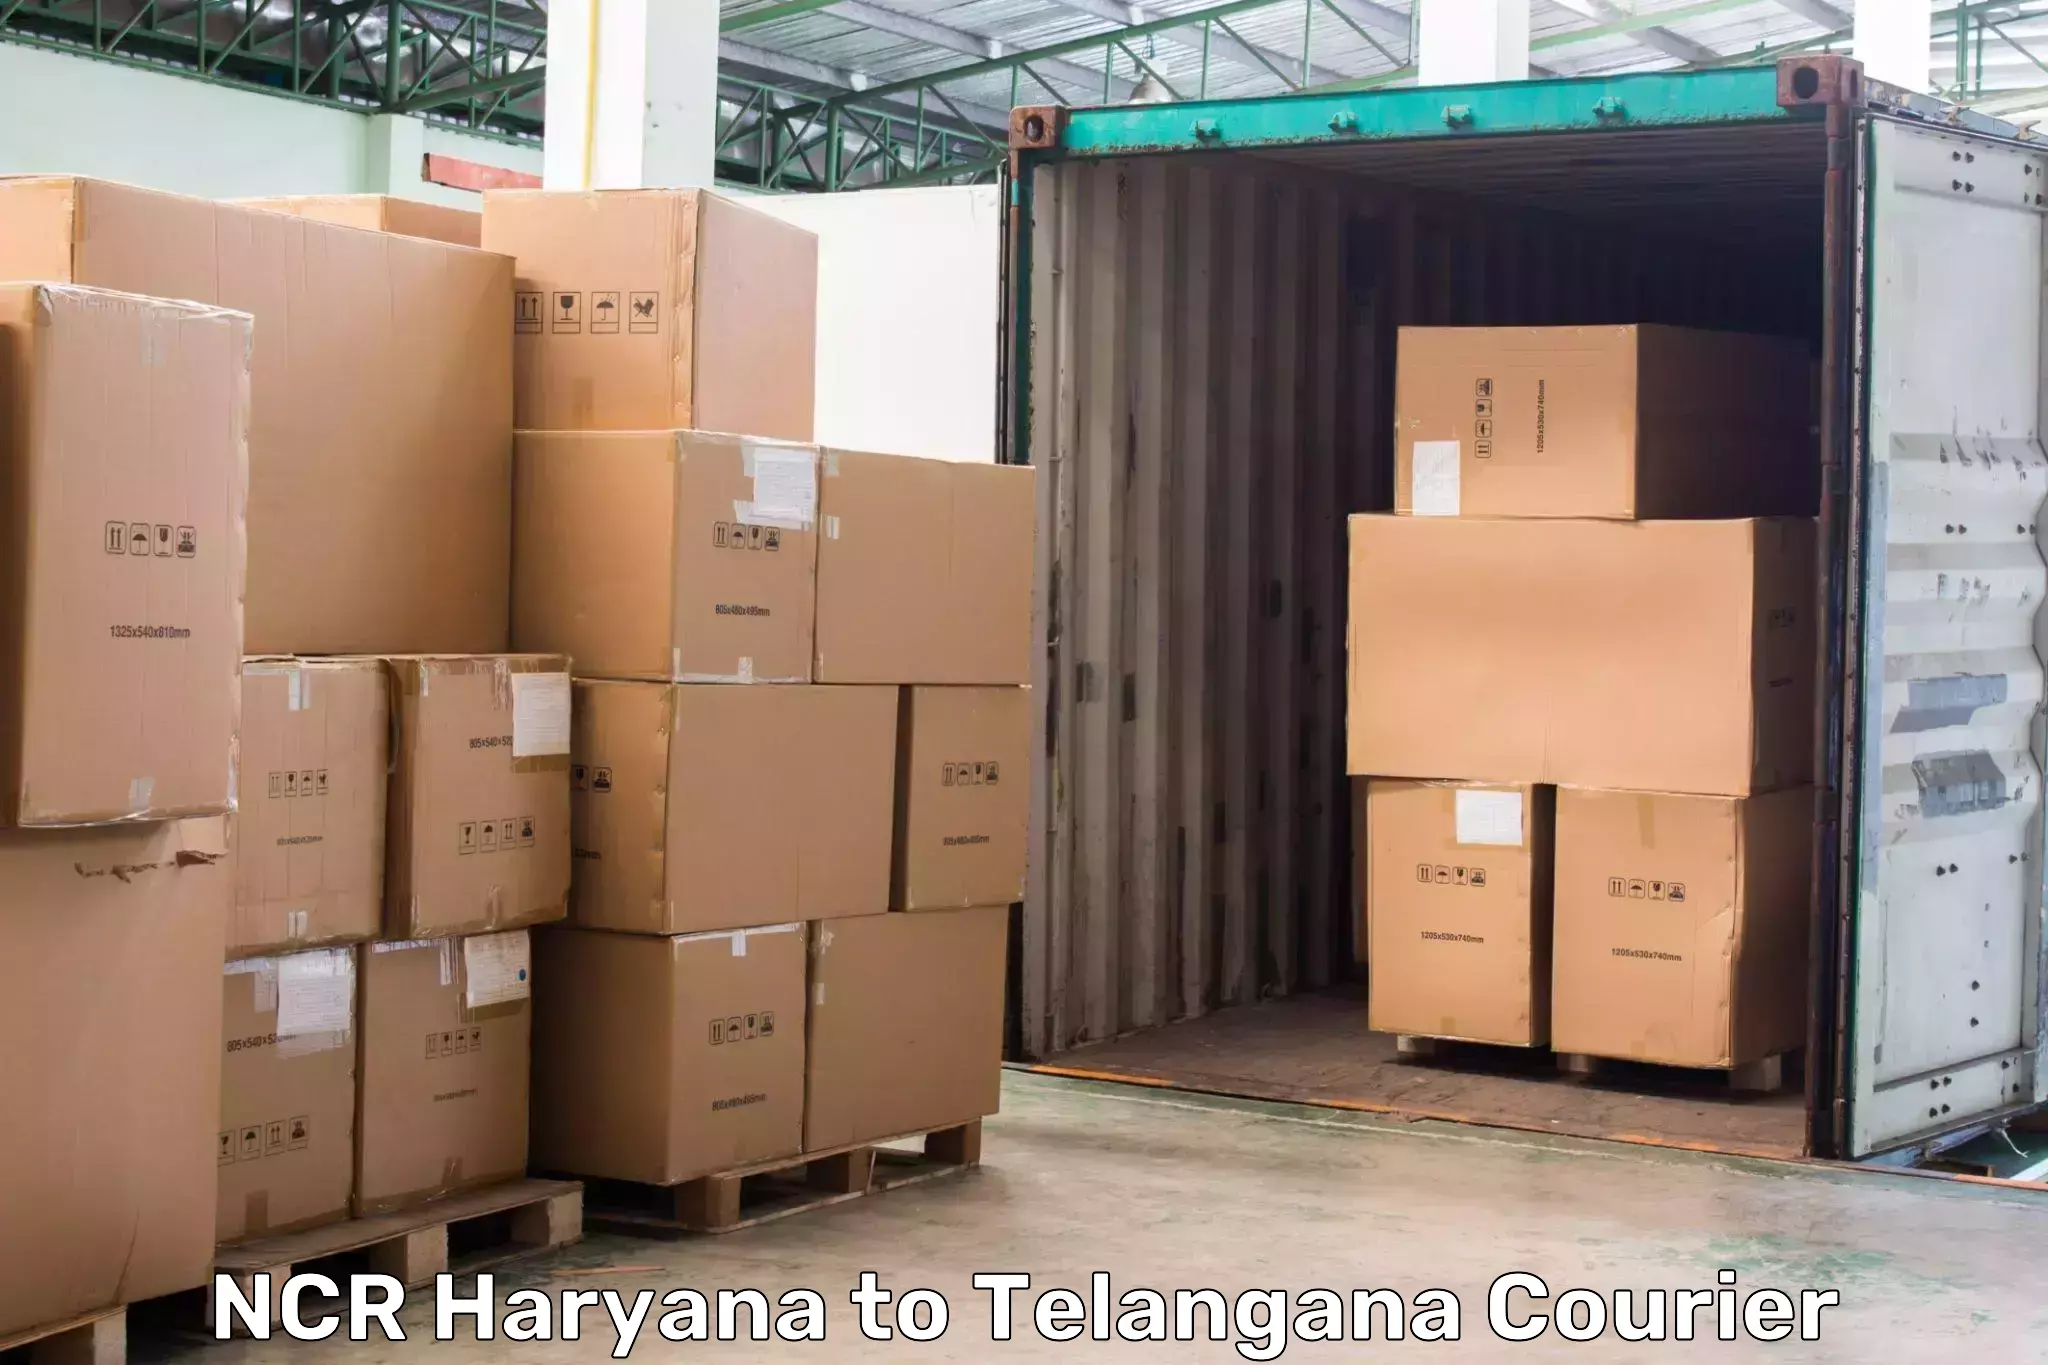 Express mail service NCR Haryana to Manopad